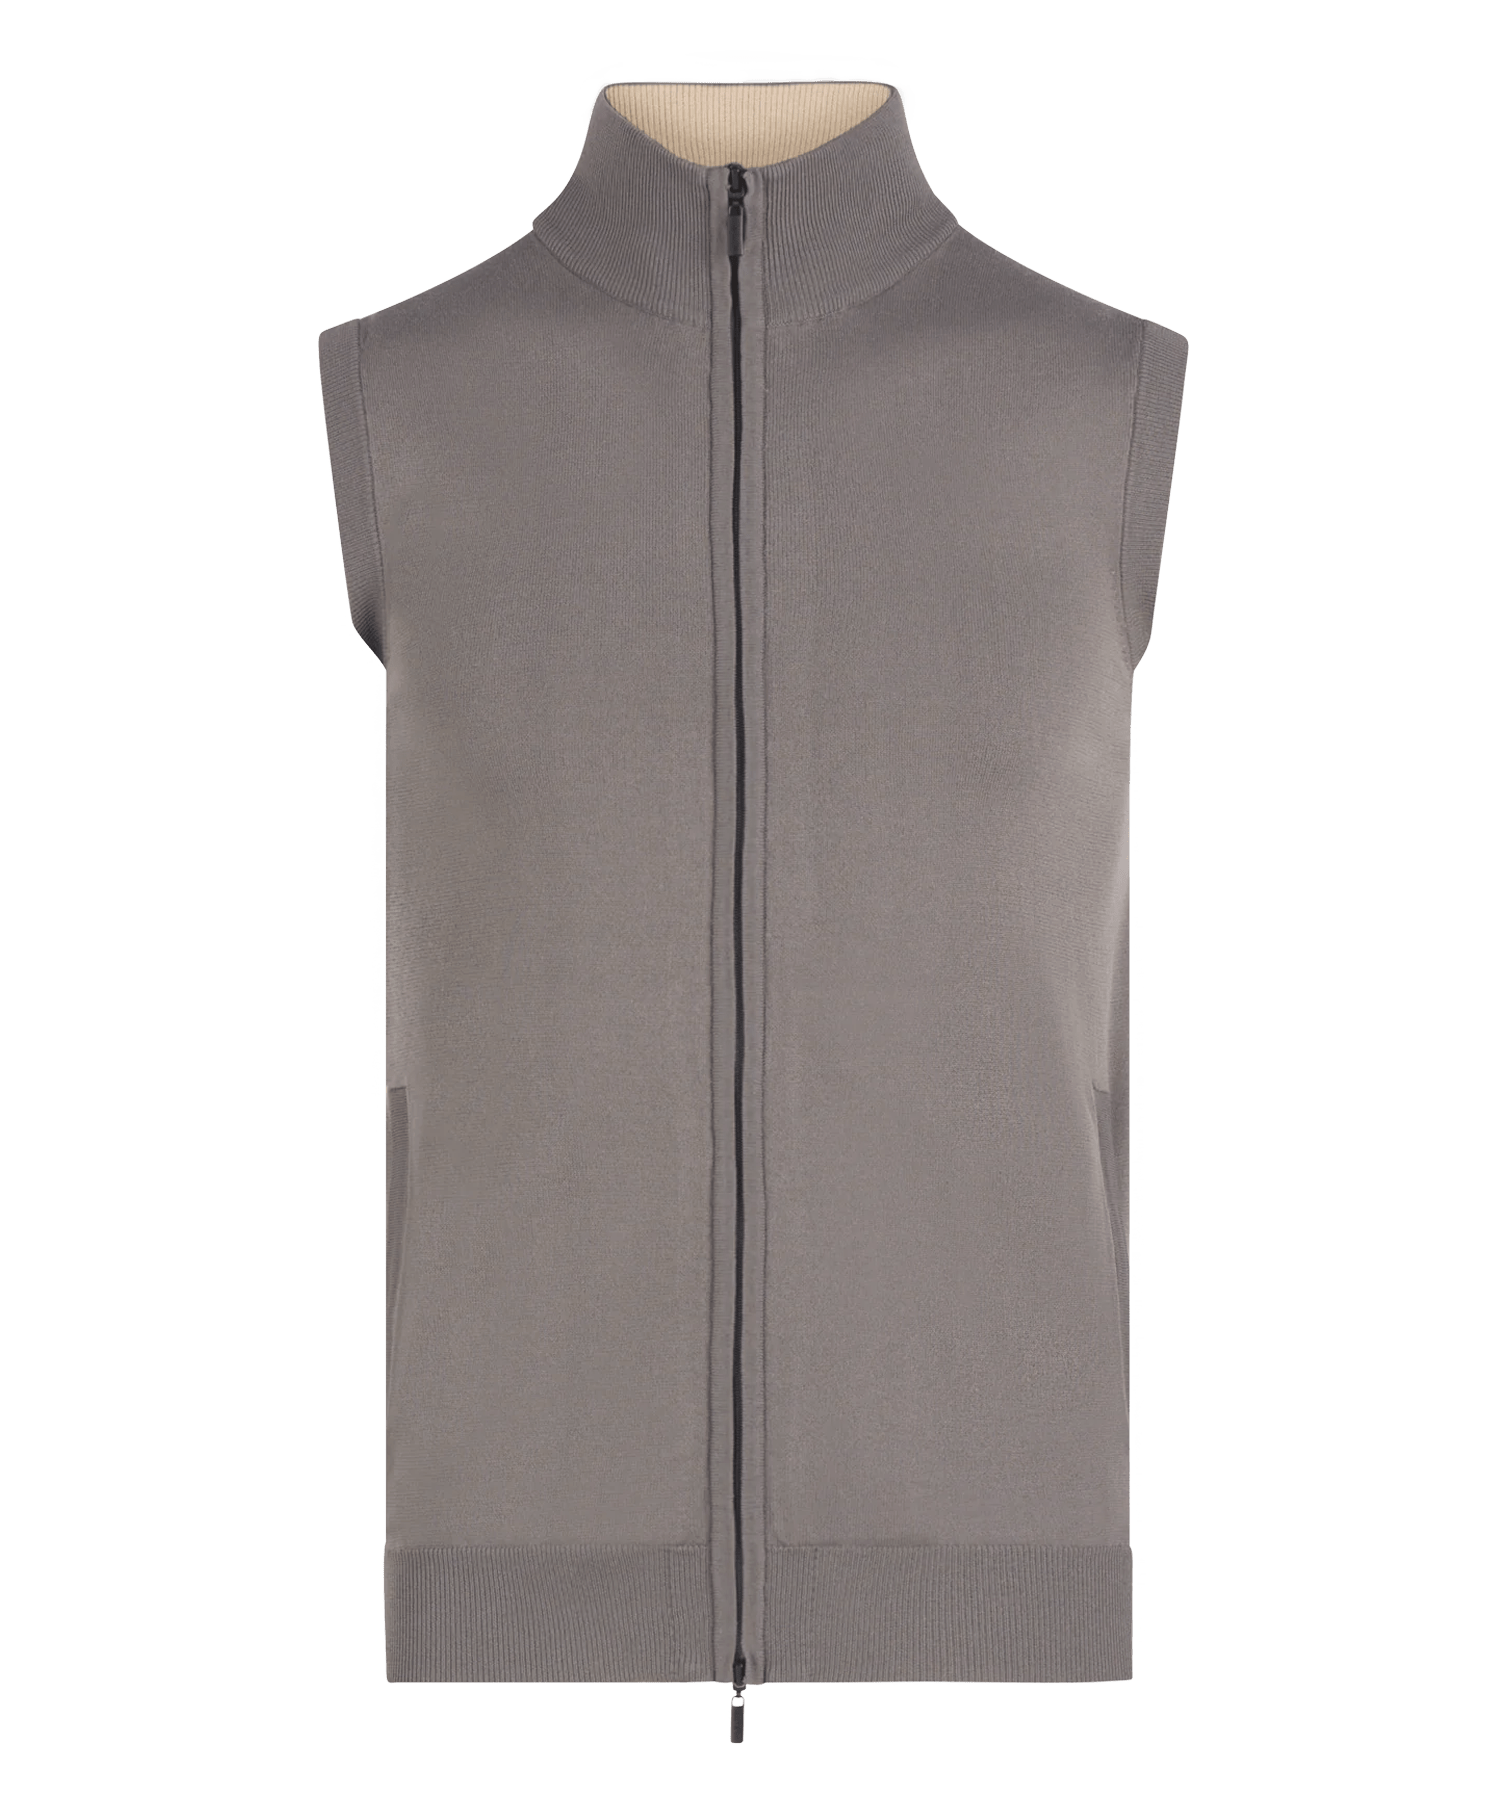 SOCI3TY Sleeveless vest techfabric taupe - The Society Shop